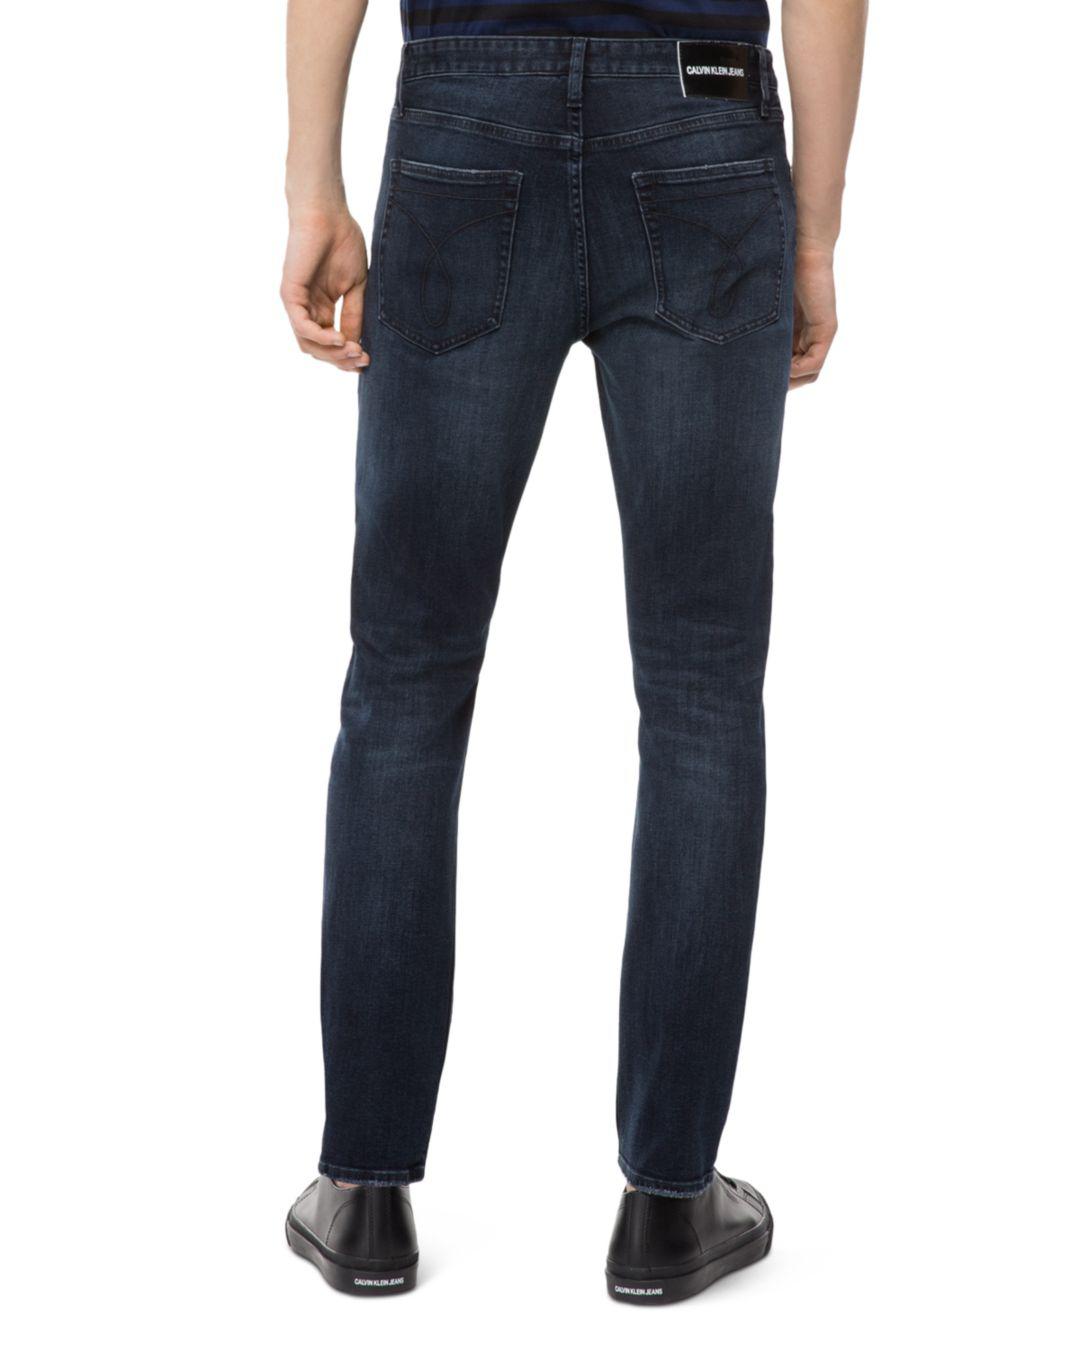 Calvin Klein Denim Slim Fit Jeans In Boston Blue for Men - Lyst